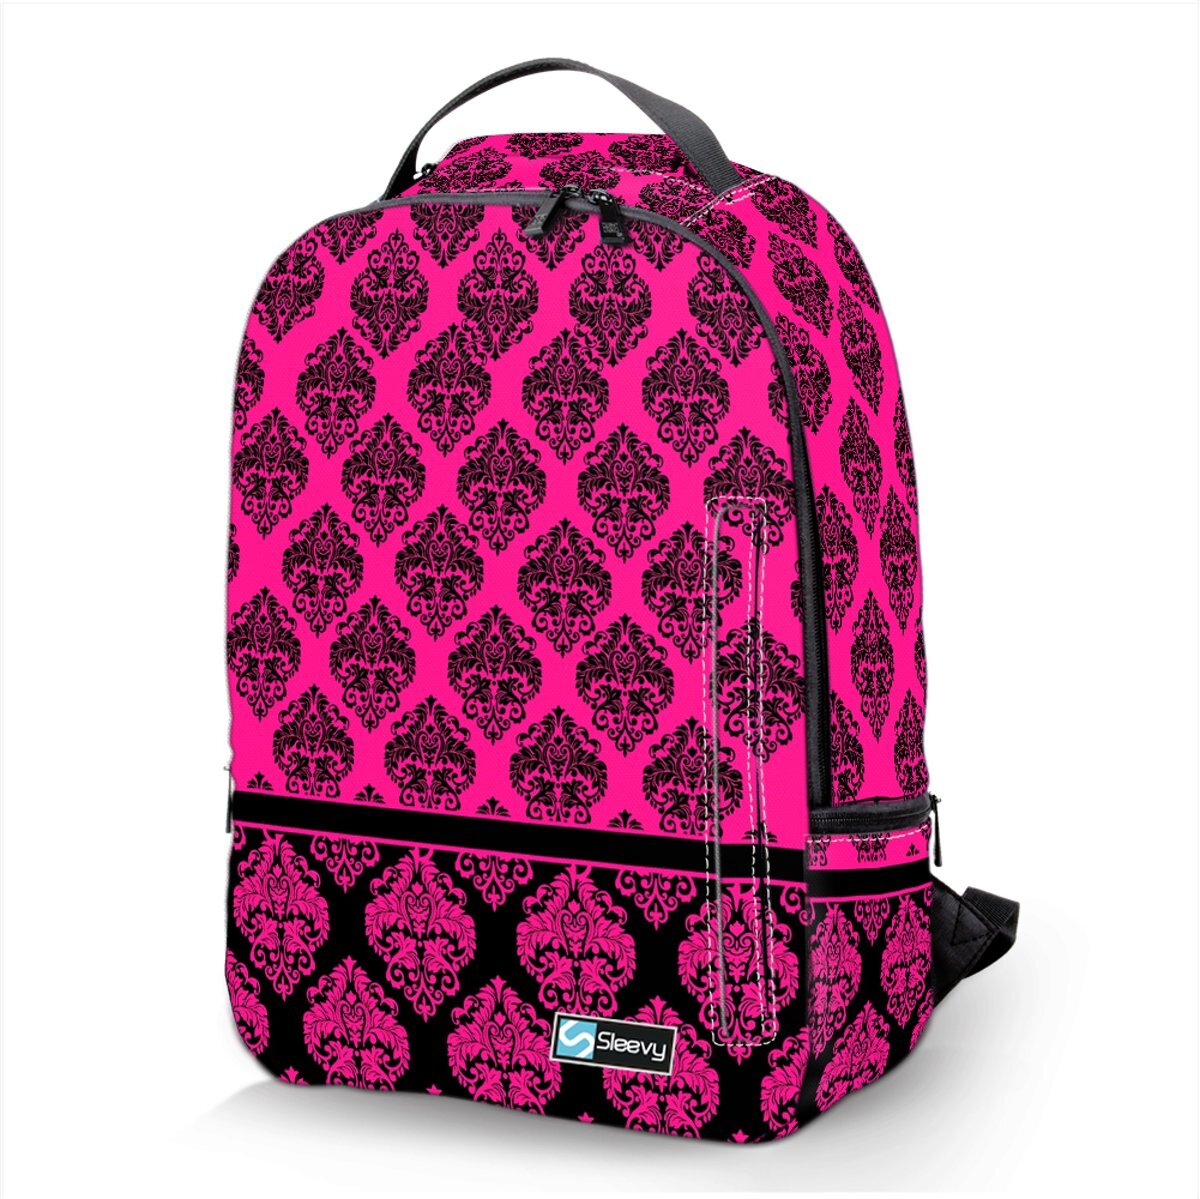 Sleevy Laptop rugzak 15 6 Deluxe roze patroon chique